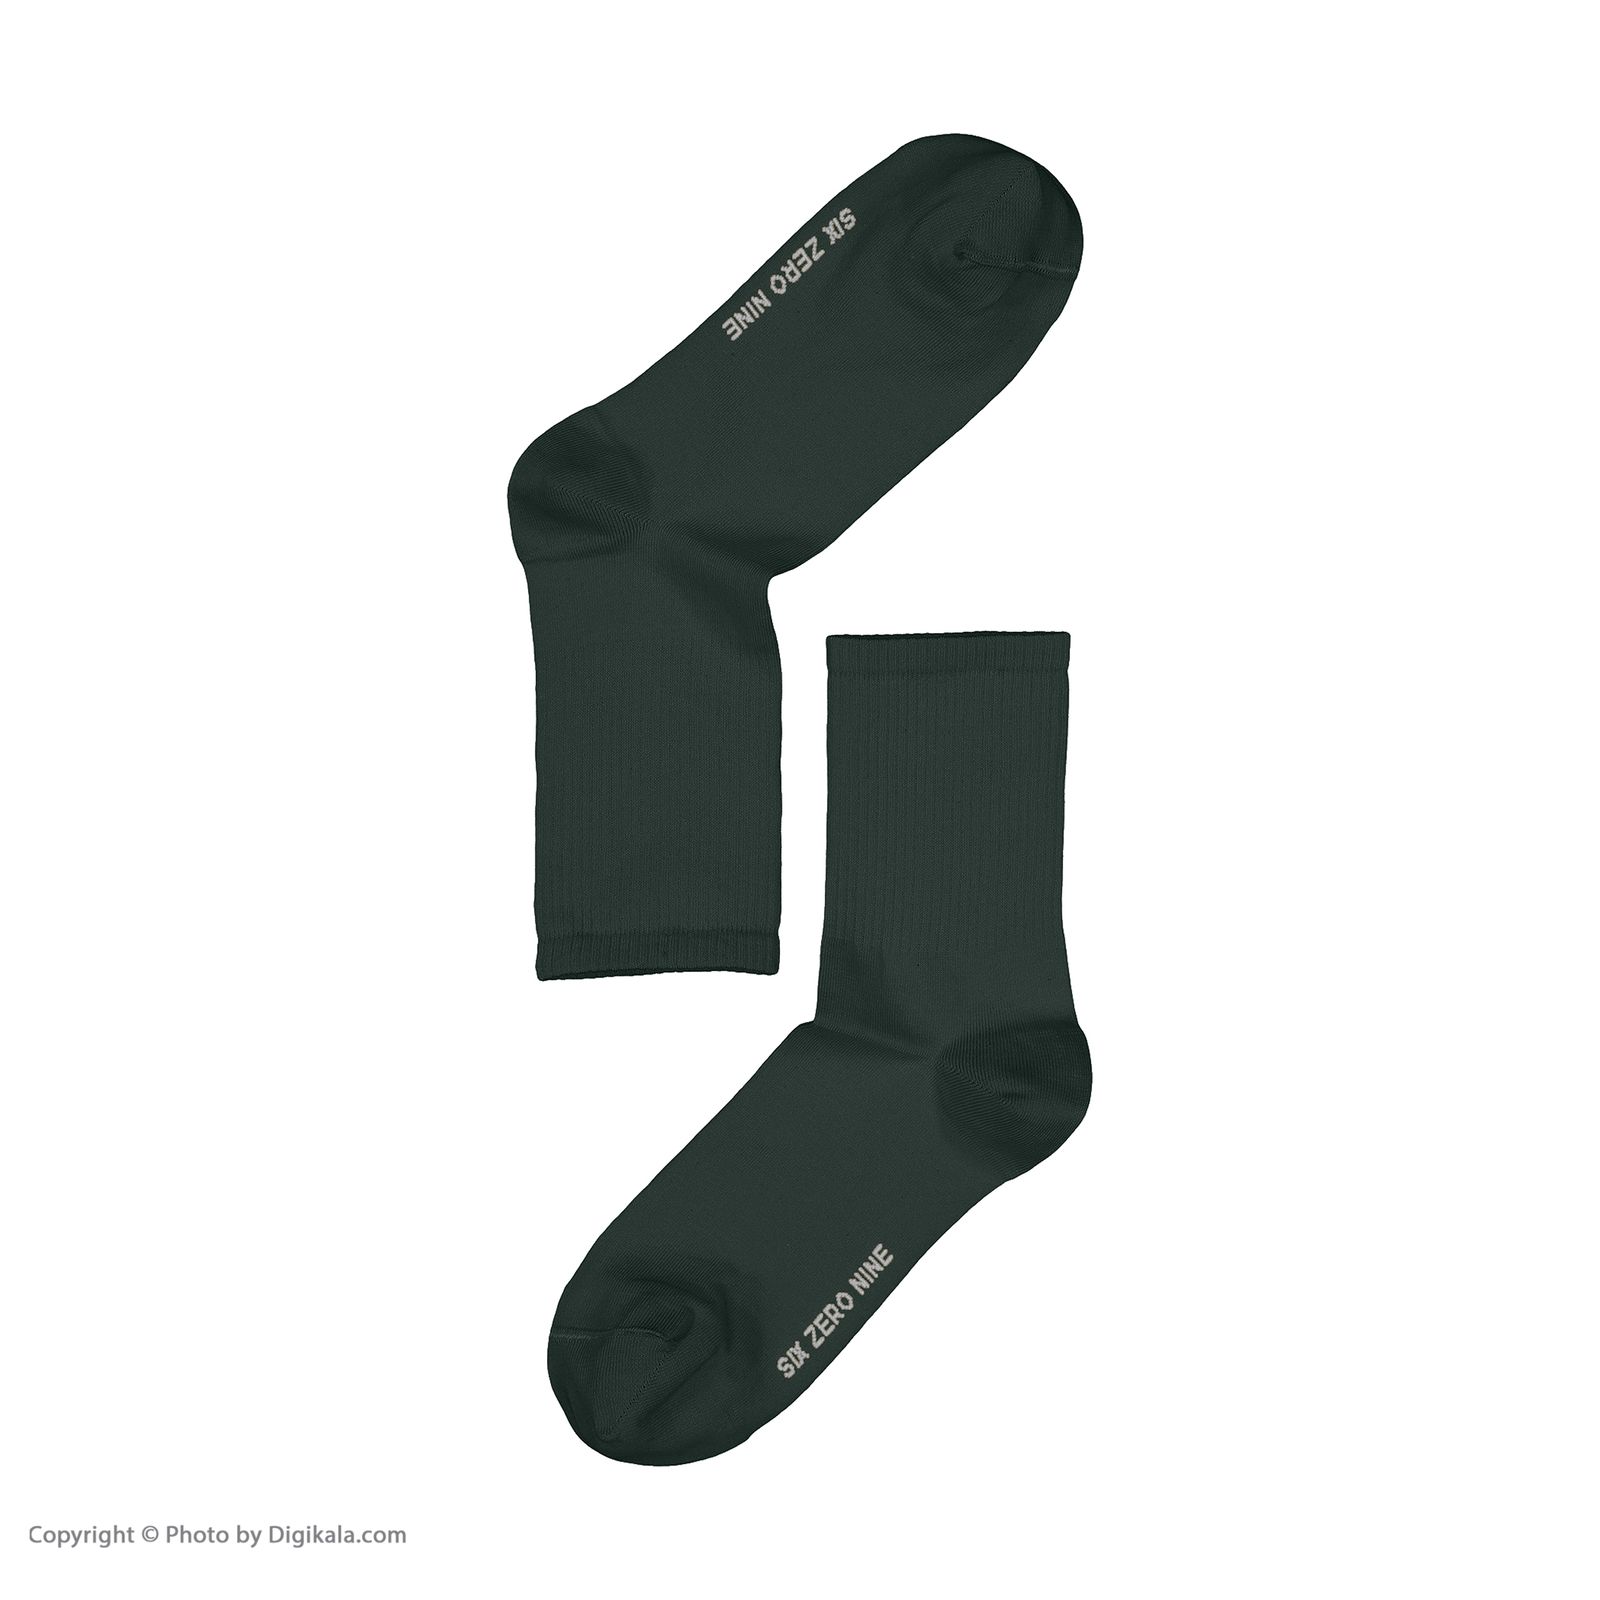 جوراب مردانه سیکس زیرو ناین مدل 1107-47 بسته 3 عددی -  - 5